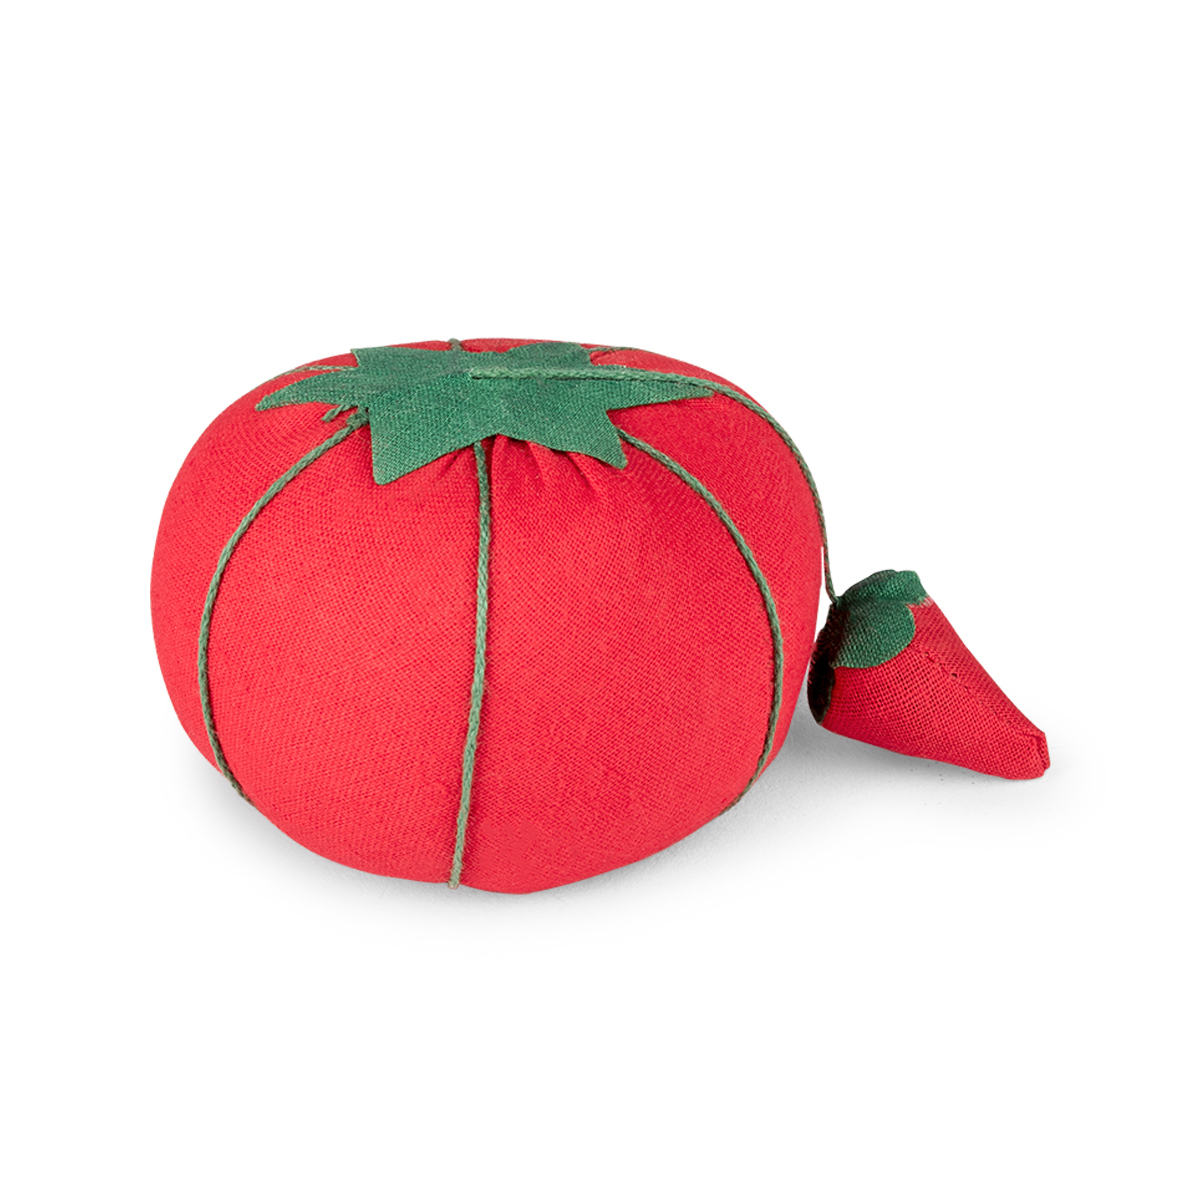 Tomato Pin Cushion - 2 3/4 - Red - WAWAK Sewing Supplies